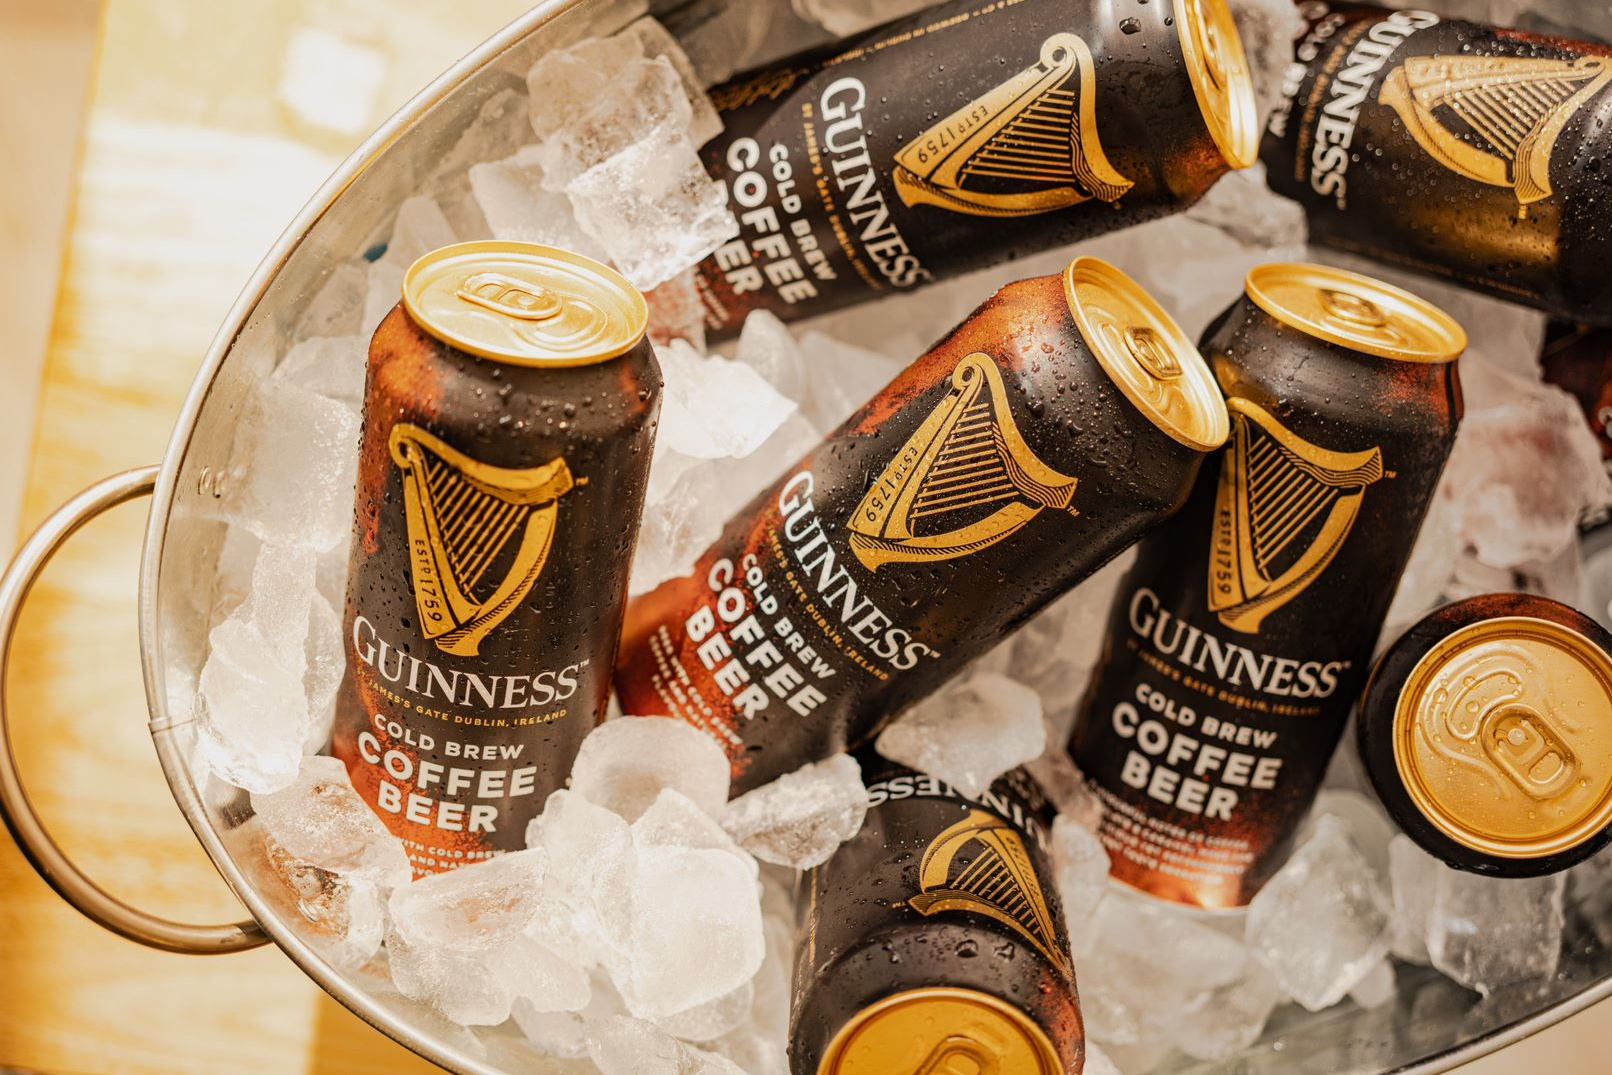 Promotion Guinness Bière foreign extra strong 7.5°, Lot de 4